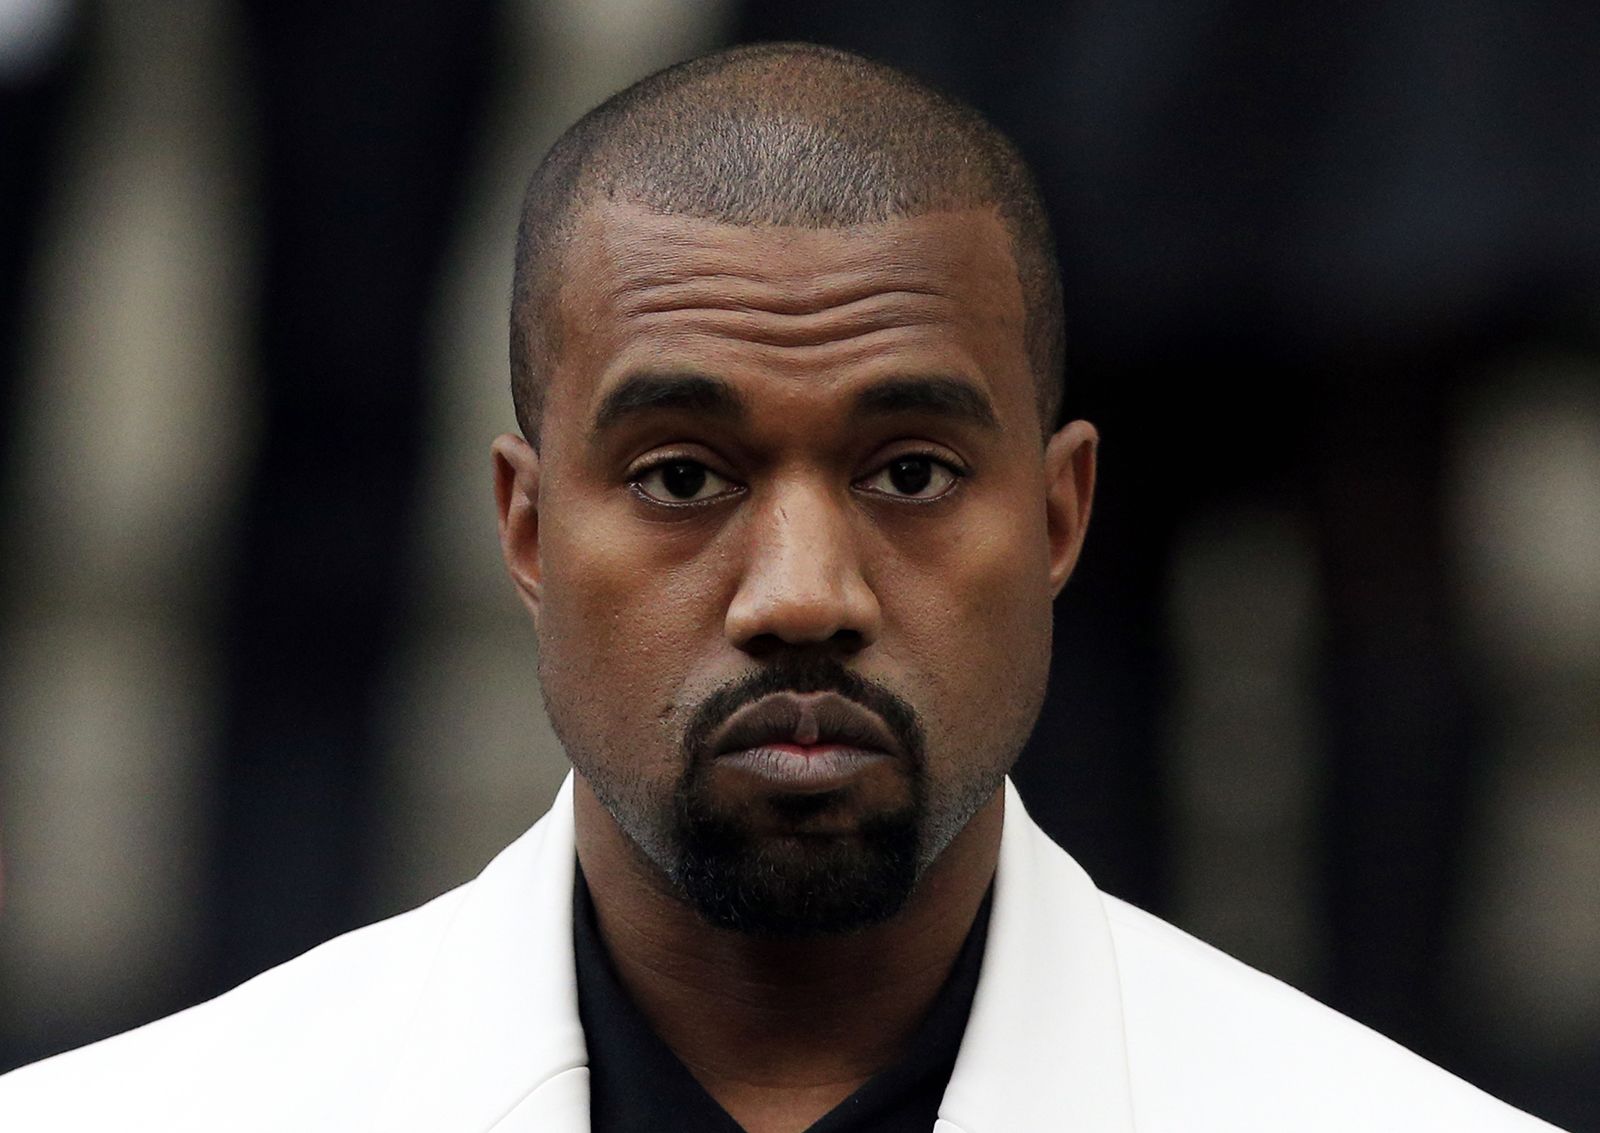 Kanye West Faces Backlash For Unauthorized Release Of Backstreet Boys’ “Everybody” Single